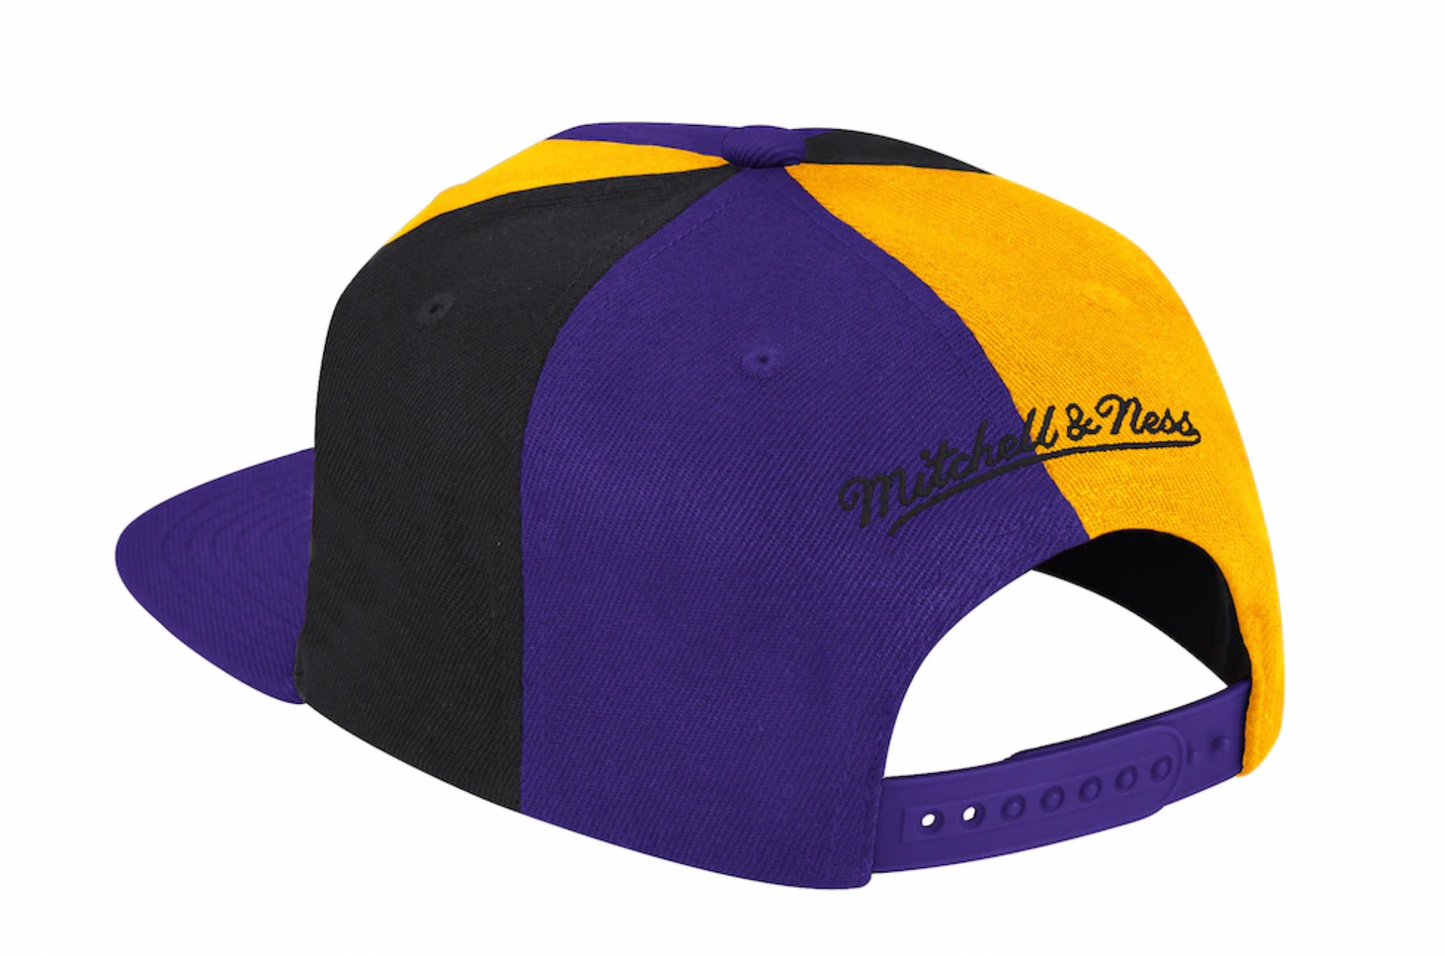 Men's Los Angeles Lakers Mitchell & Ness NBA Pinwheel Snapback Hat